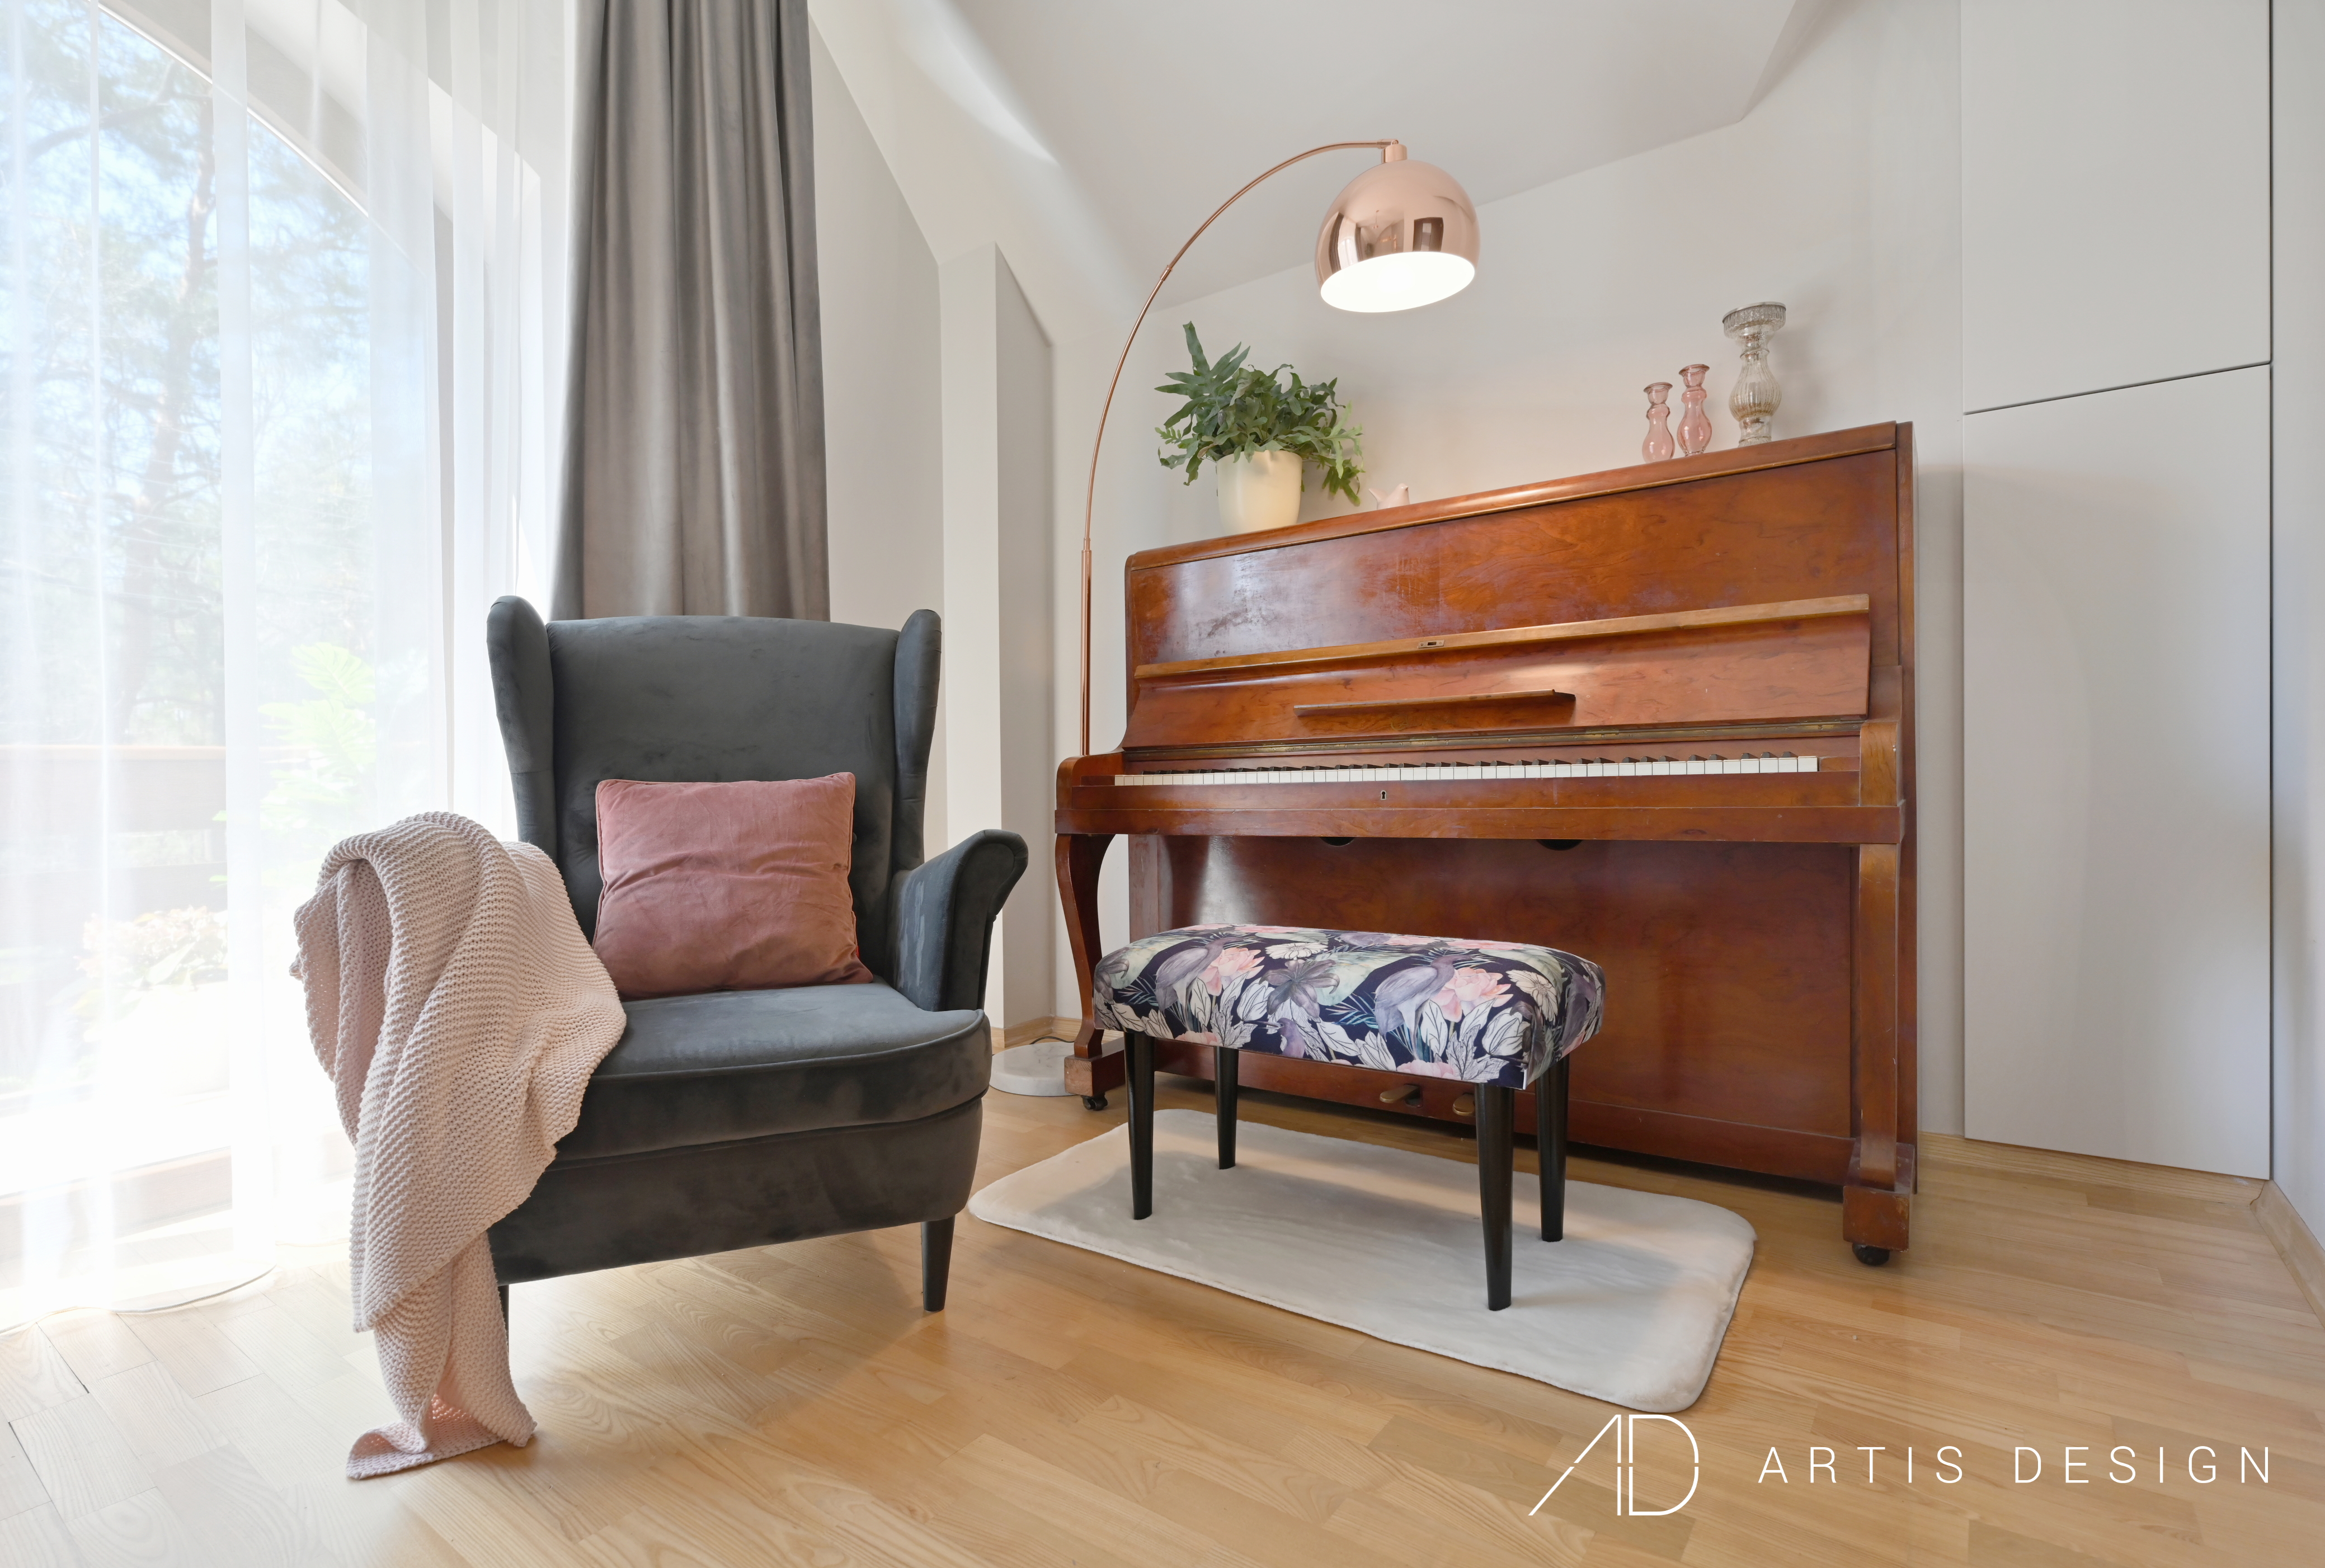 Projekt: Sypialnia ze skosami | Artis Design: Studio projektowe